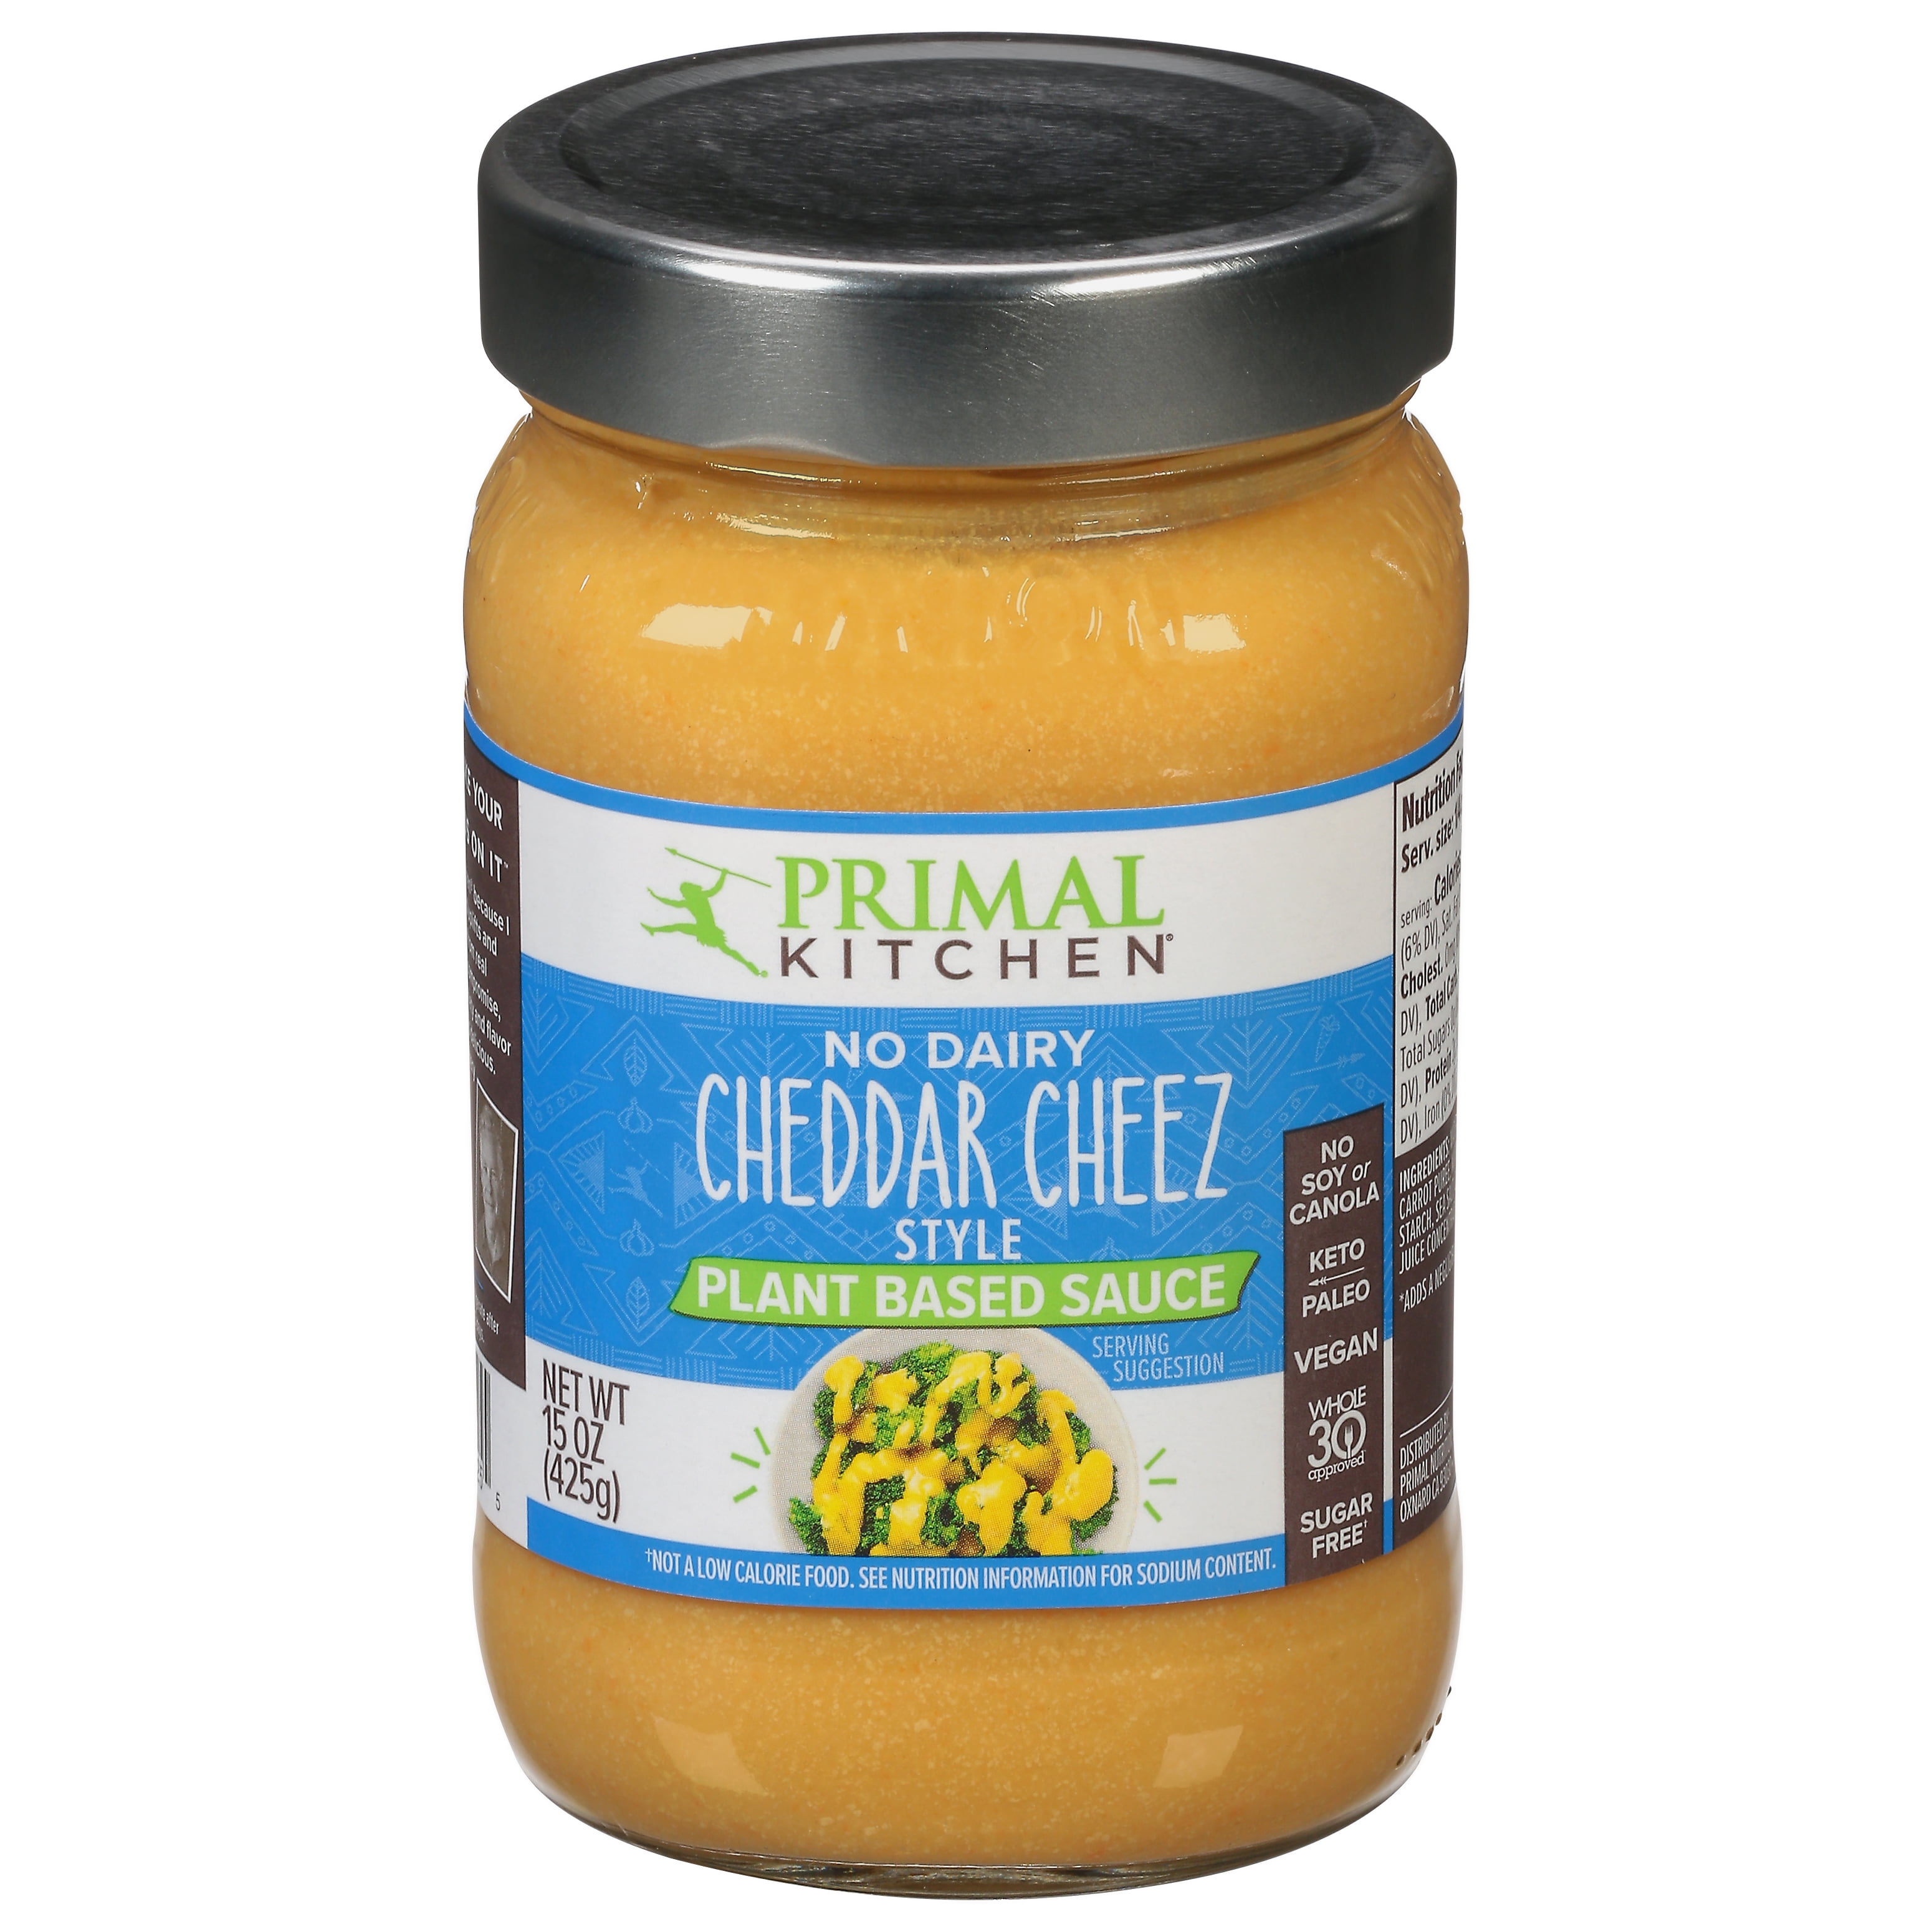 Primal Kitchen Cheez Sauce Reviews & Info (Dairy-Free Cheddar)